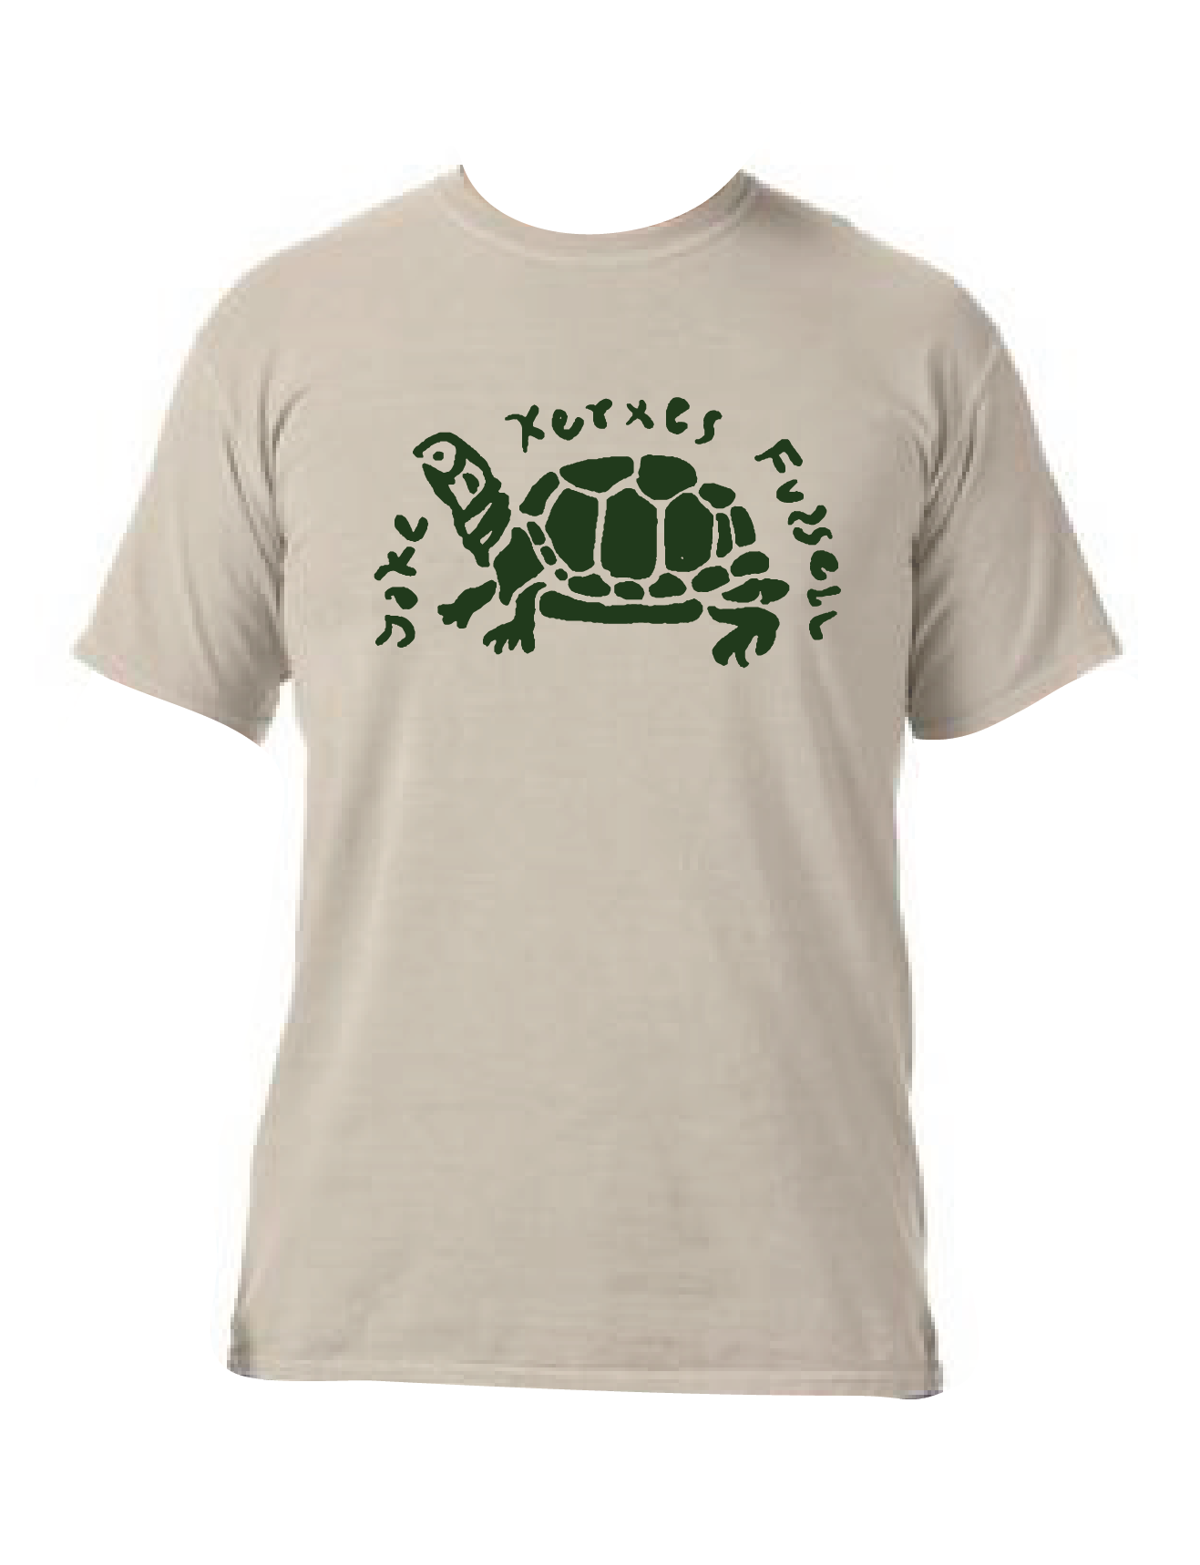 *New* Kids Tortoise Shirt - Jake Xerxes Fussell